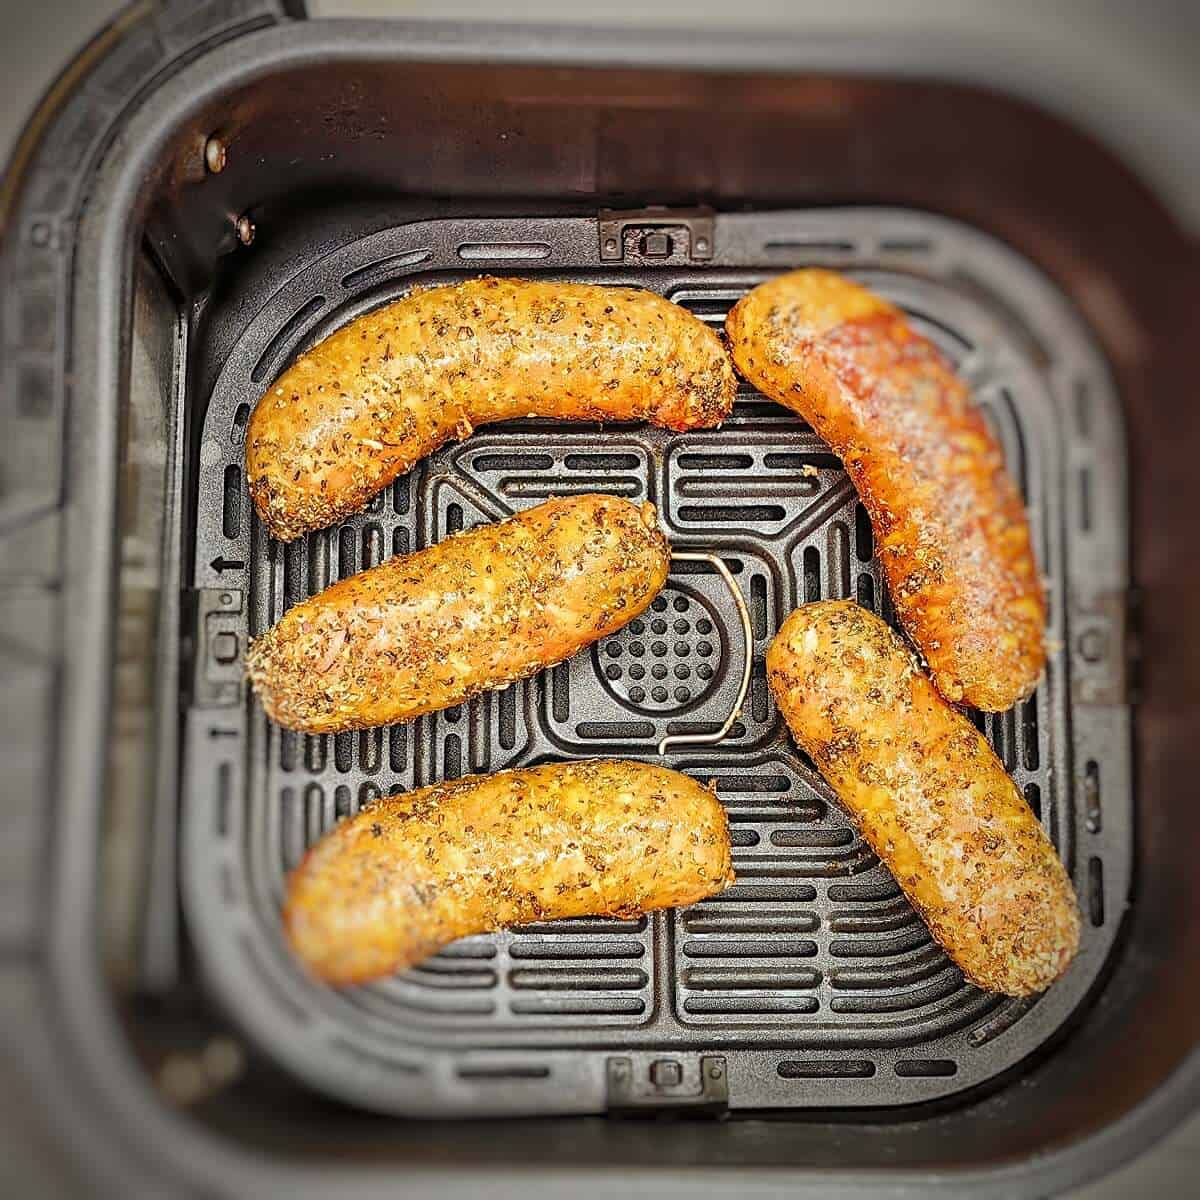 arrange italian sausage in the air fryer